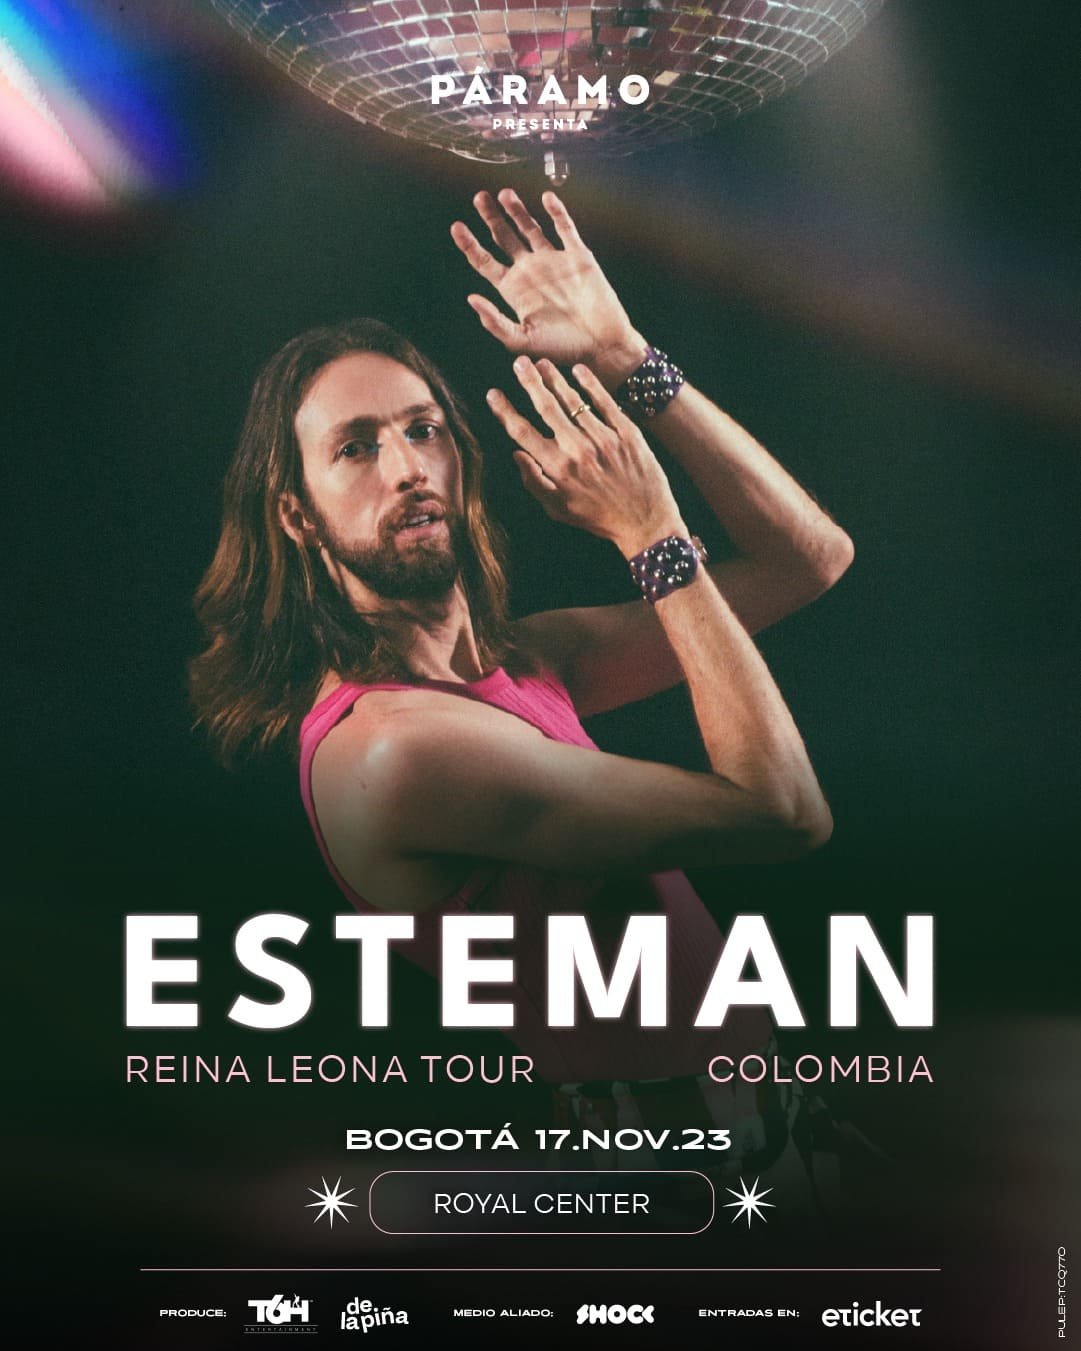 El Reina Leona Tour de Esteman, anuncia gira en Colombia